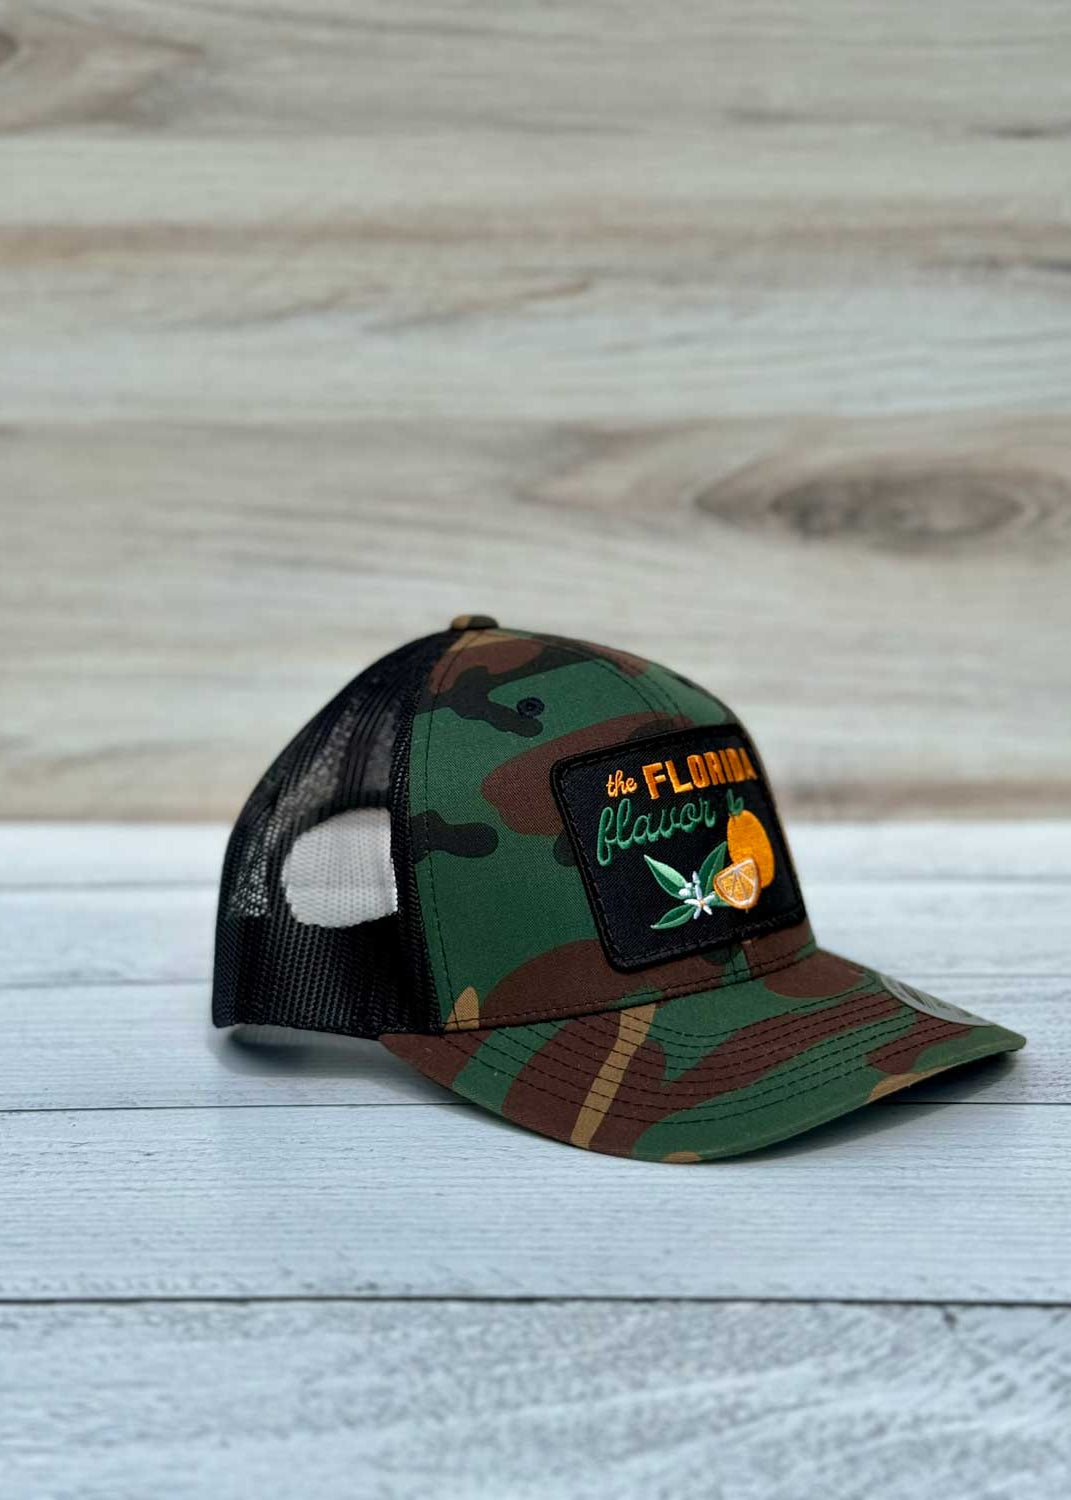 Florida Flavor:  Orange Grove Camo Hat